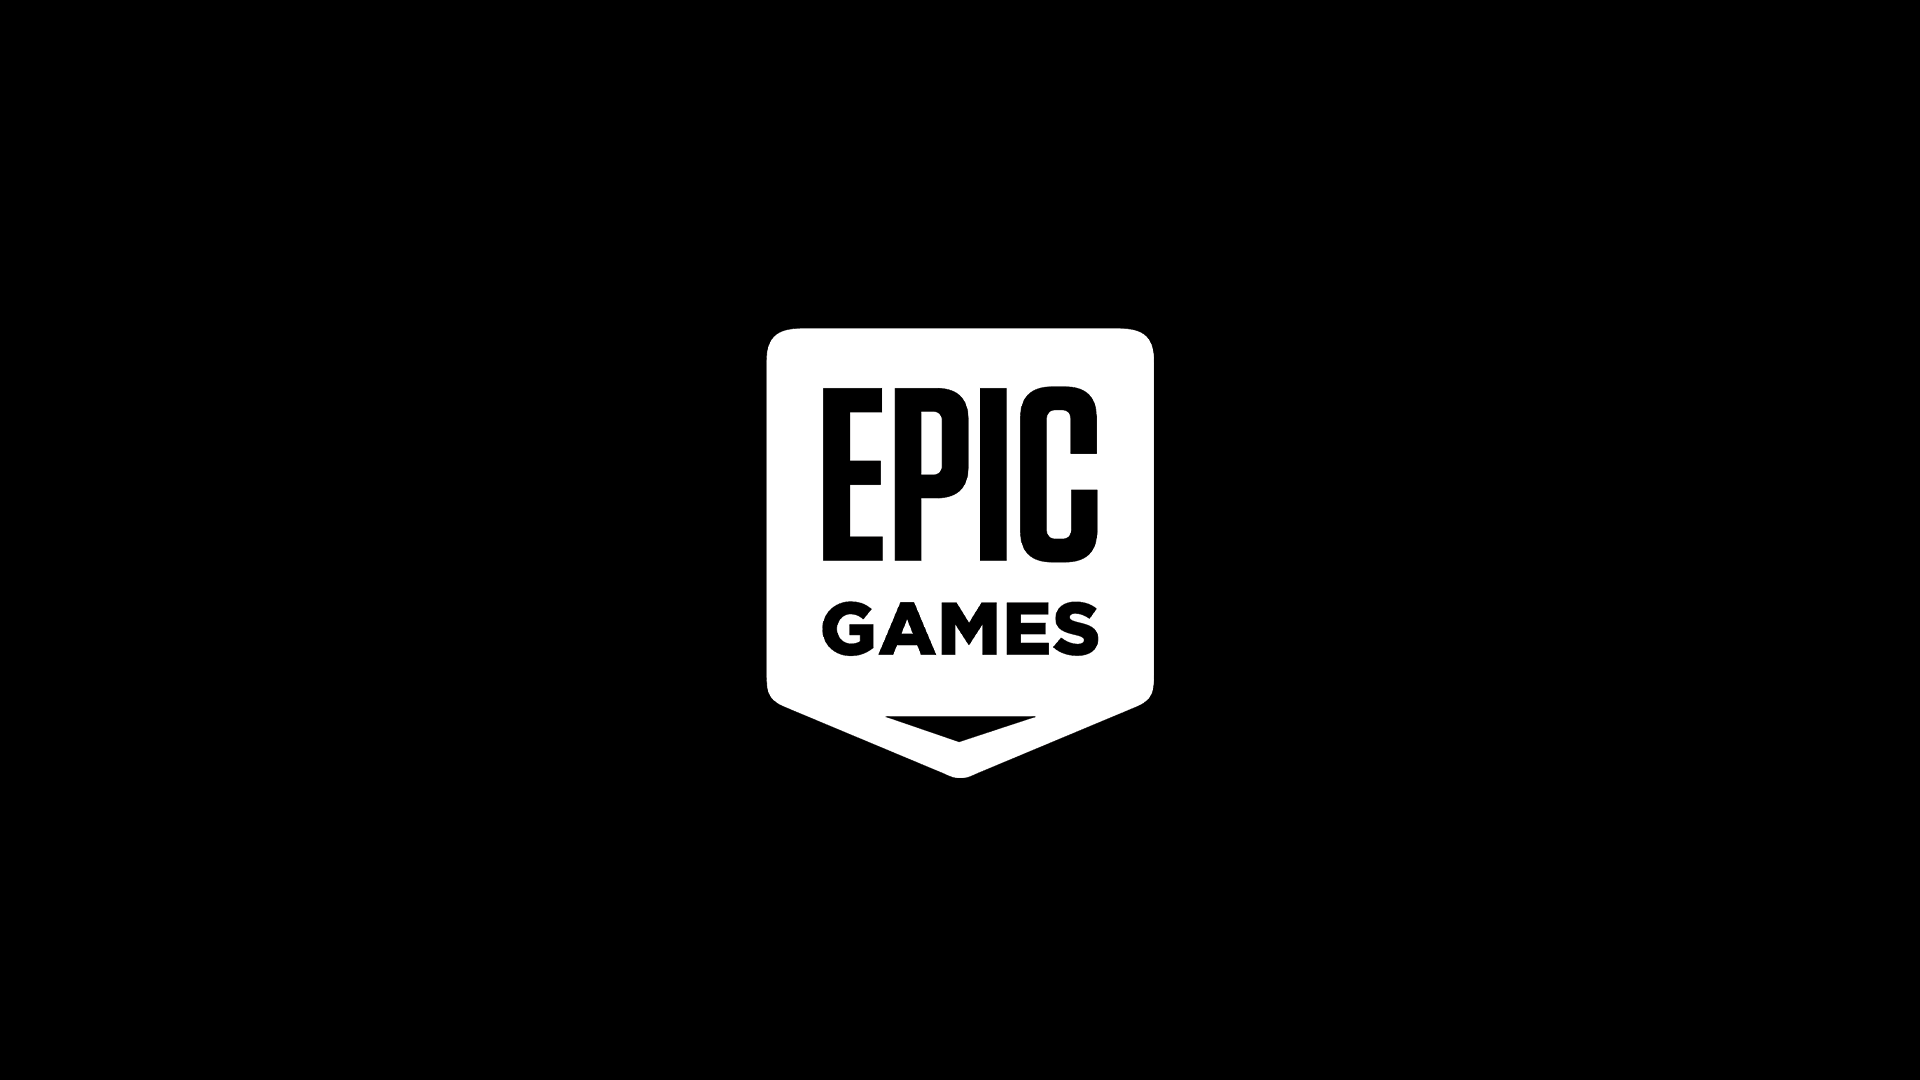 Epic Gamesがショップデザインと返品システム、プライバシー違反に関する問題で連邦取引委員会(FTC)へ5億2000万ドル支払うことで和解へ。